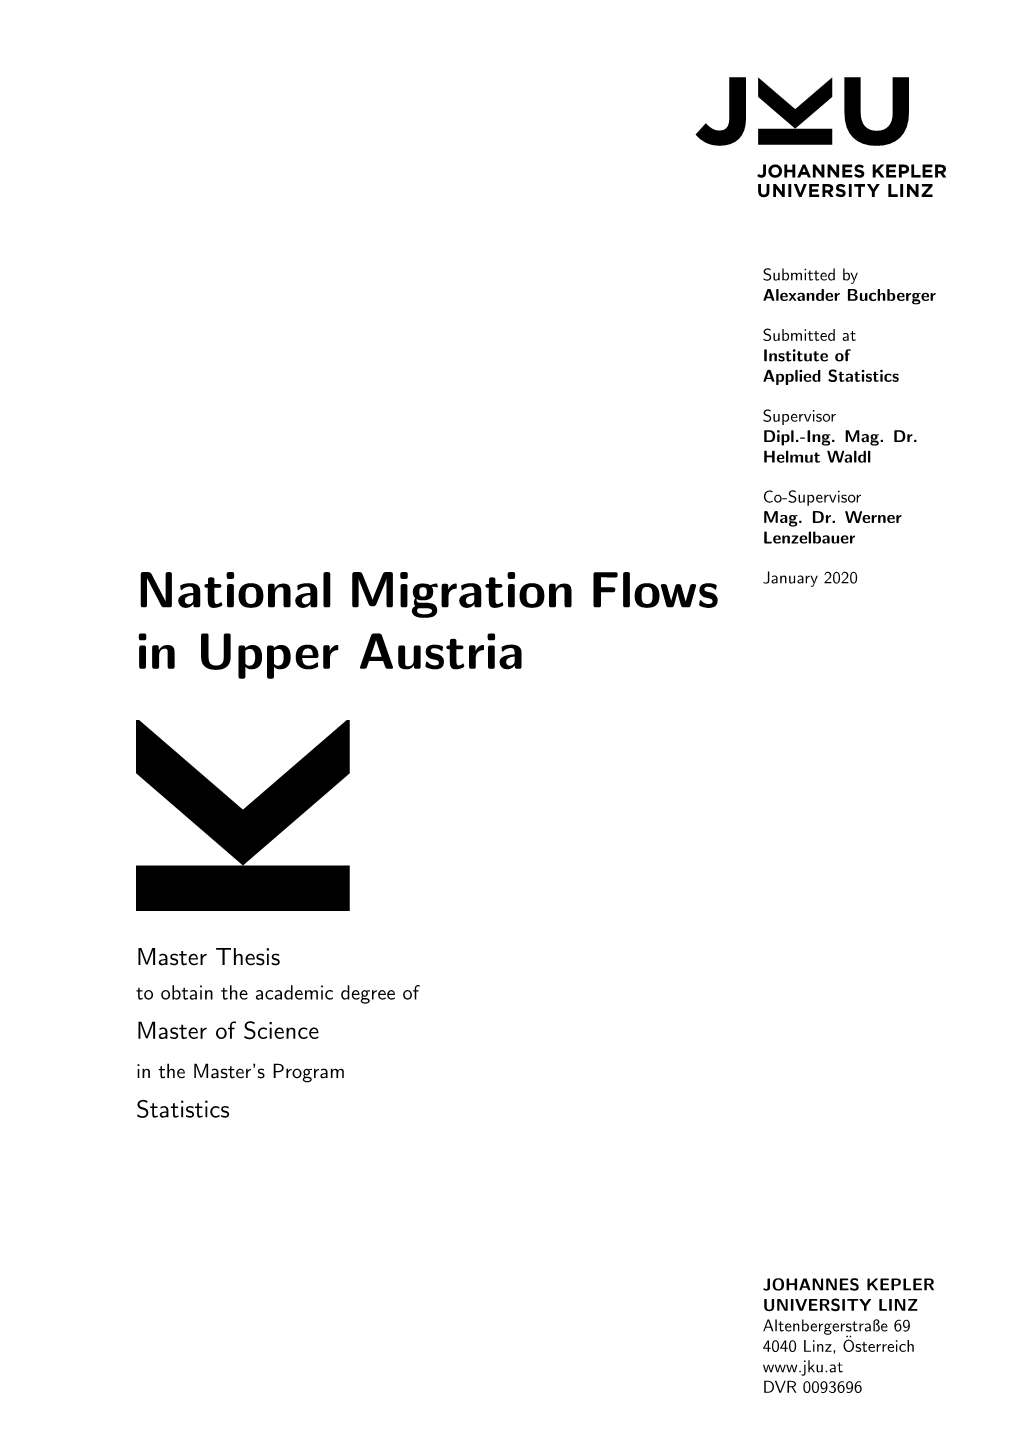 National Migration Flows in Upper Austria